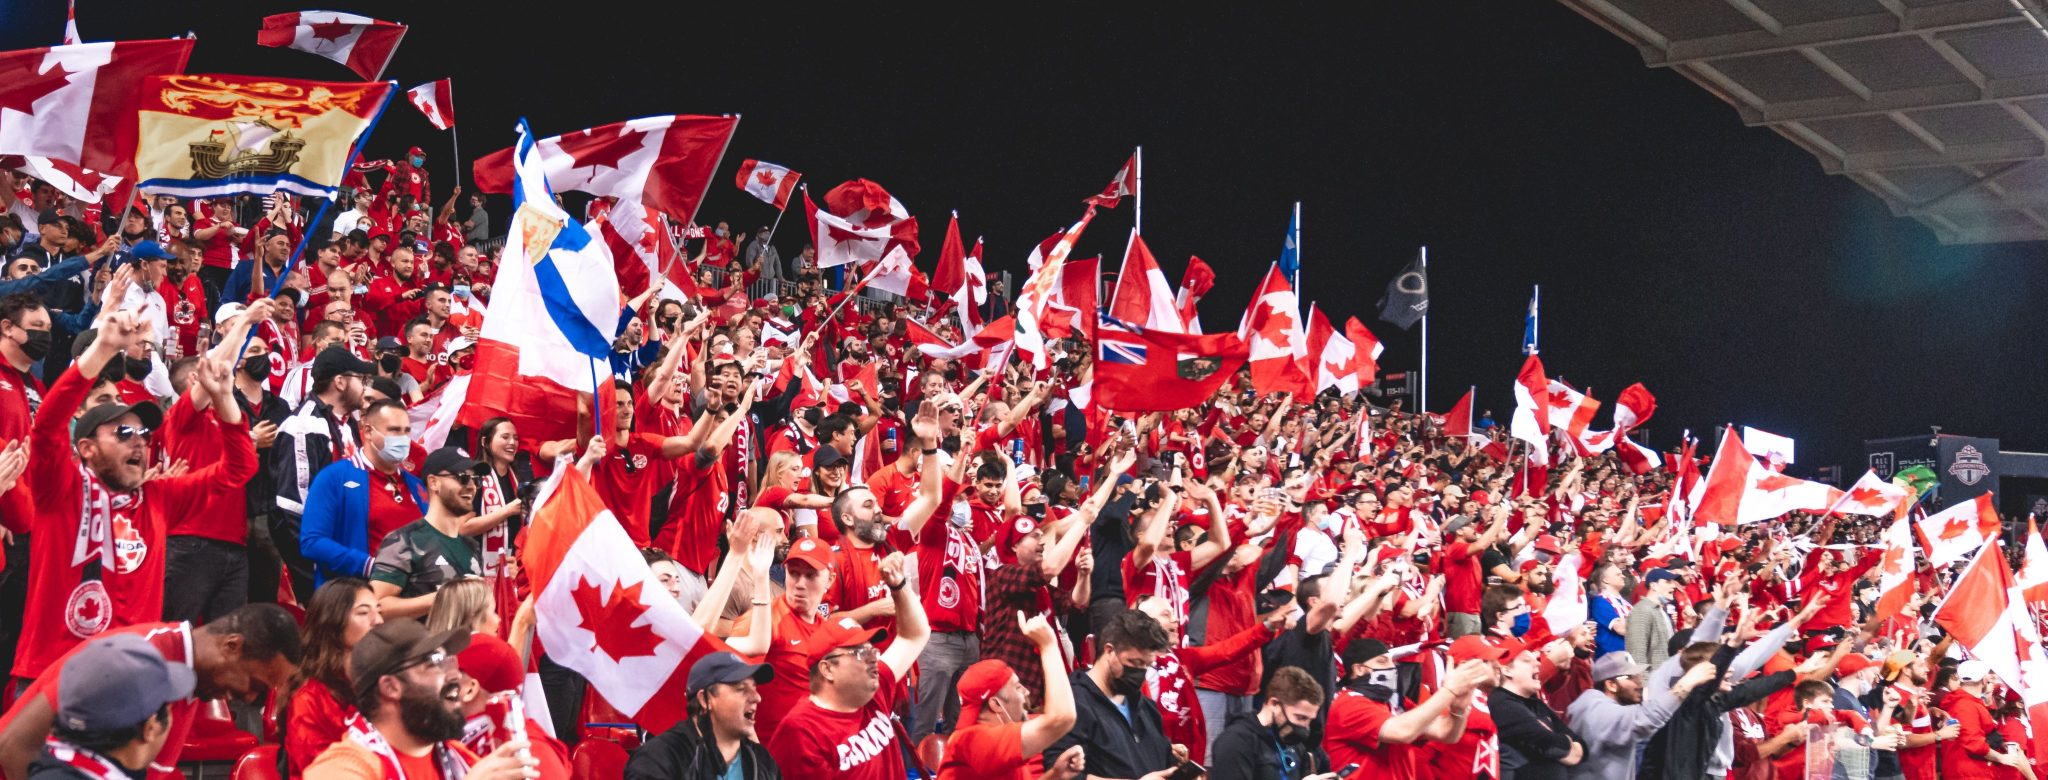 O Grande Norte e os grandes desafios: o que o futuro reserva para o futebol masculino do Canadá?